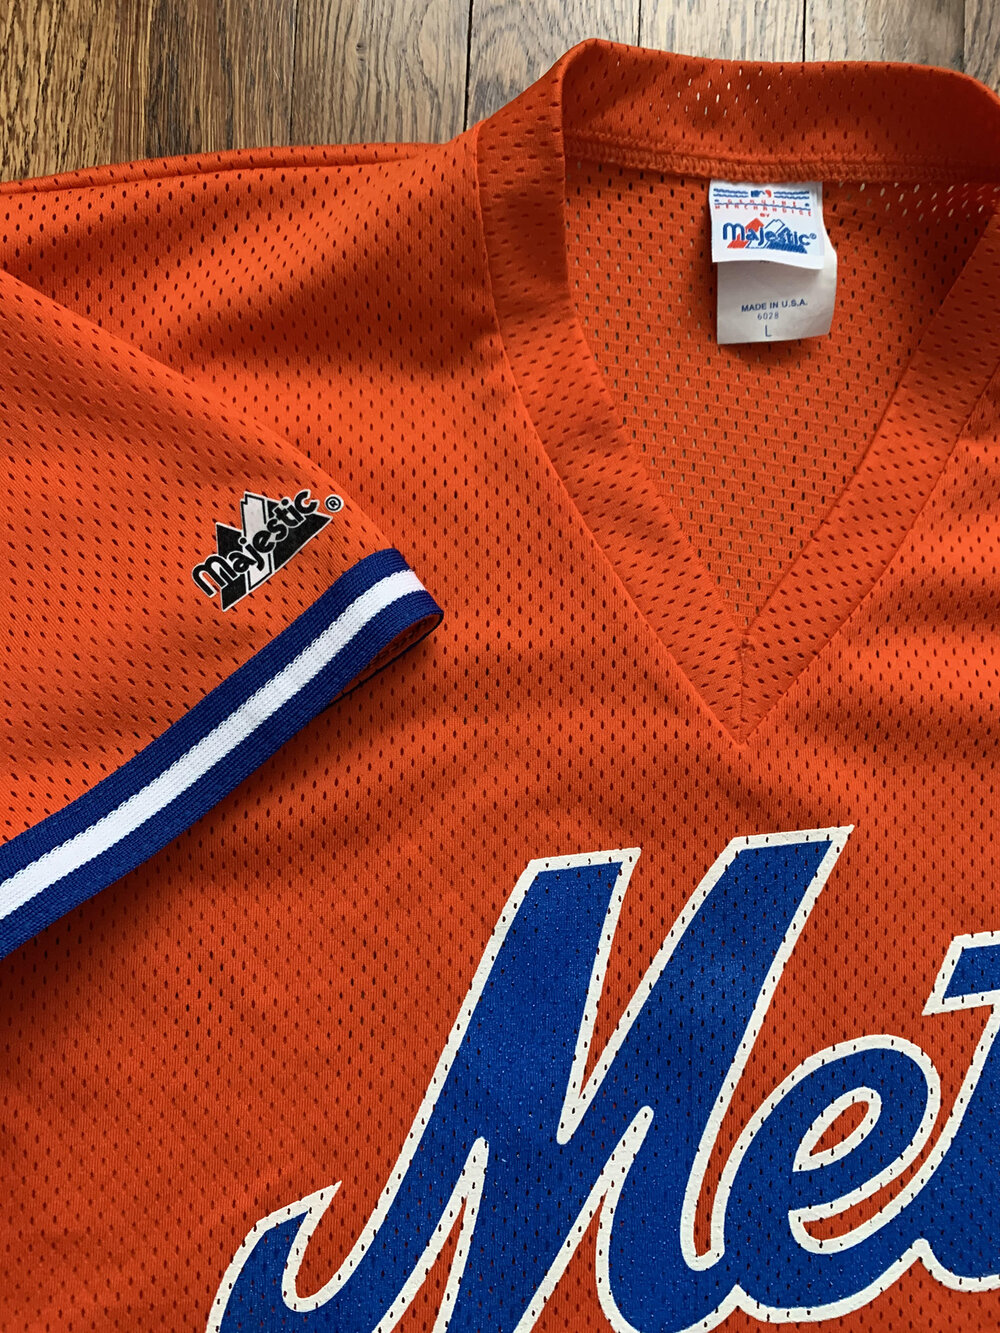 Vintage Majestic New York Mets Orange Mesh Jersey (Size L) — Roots